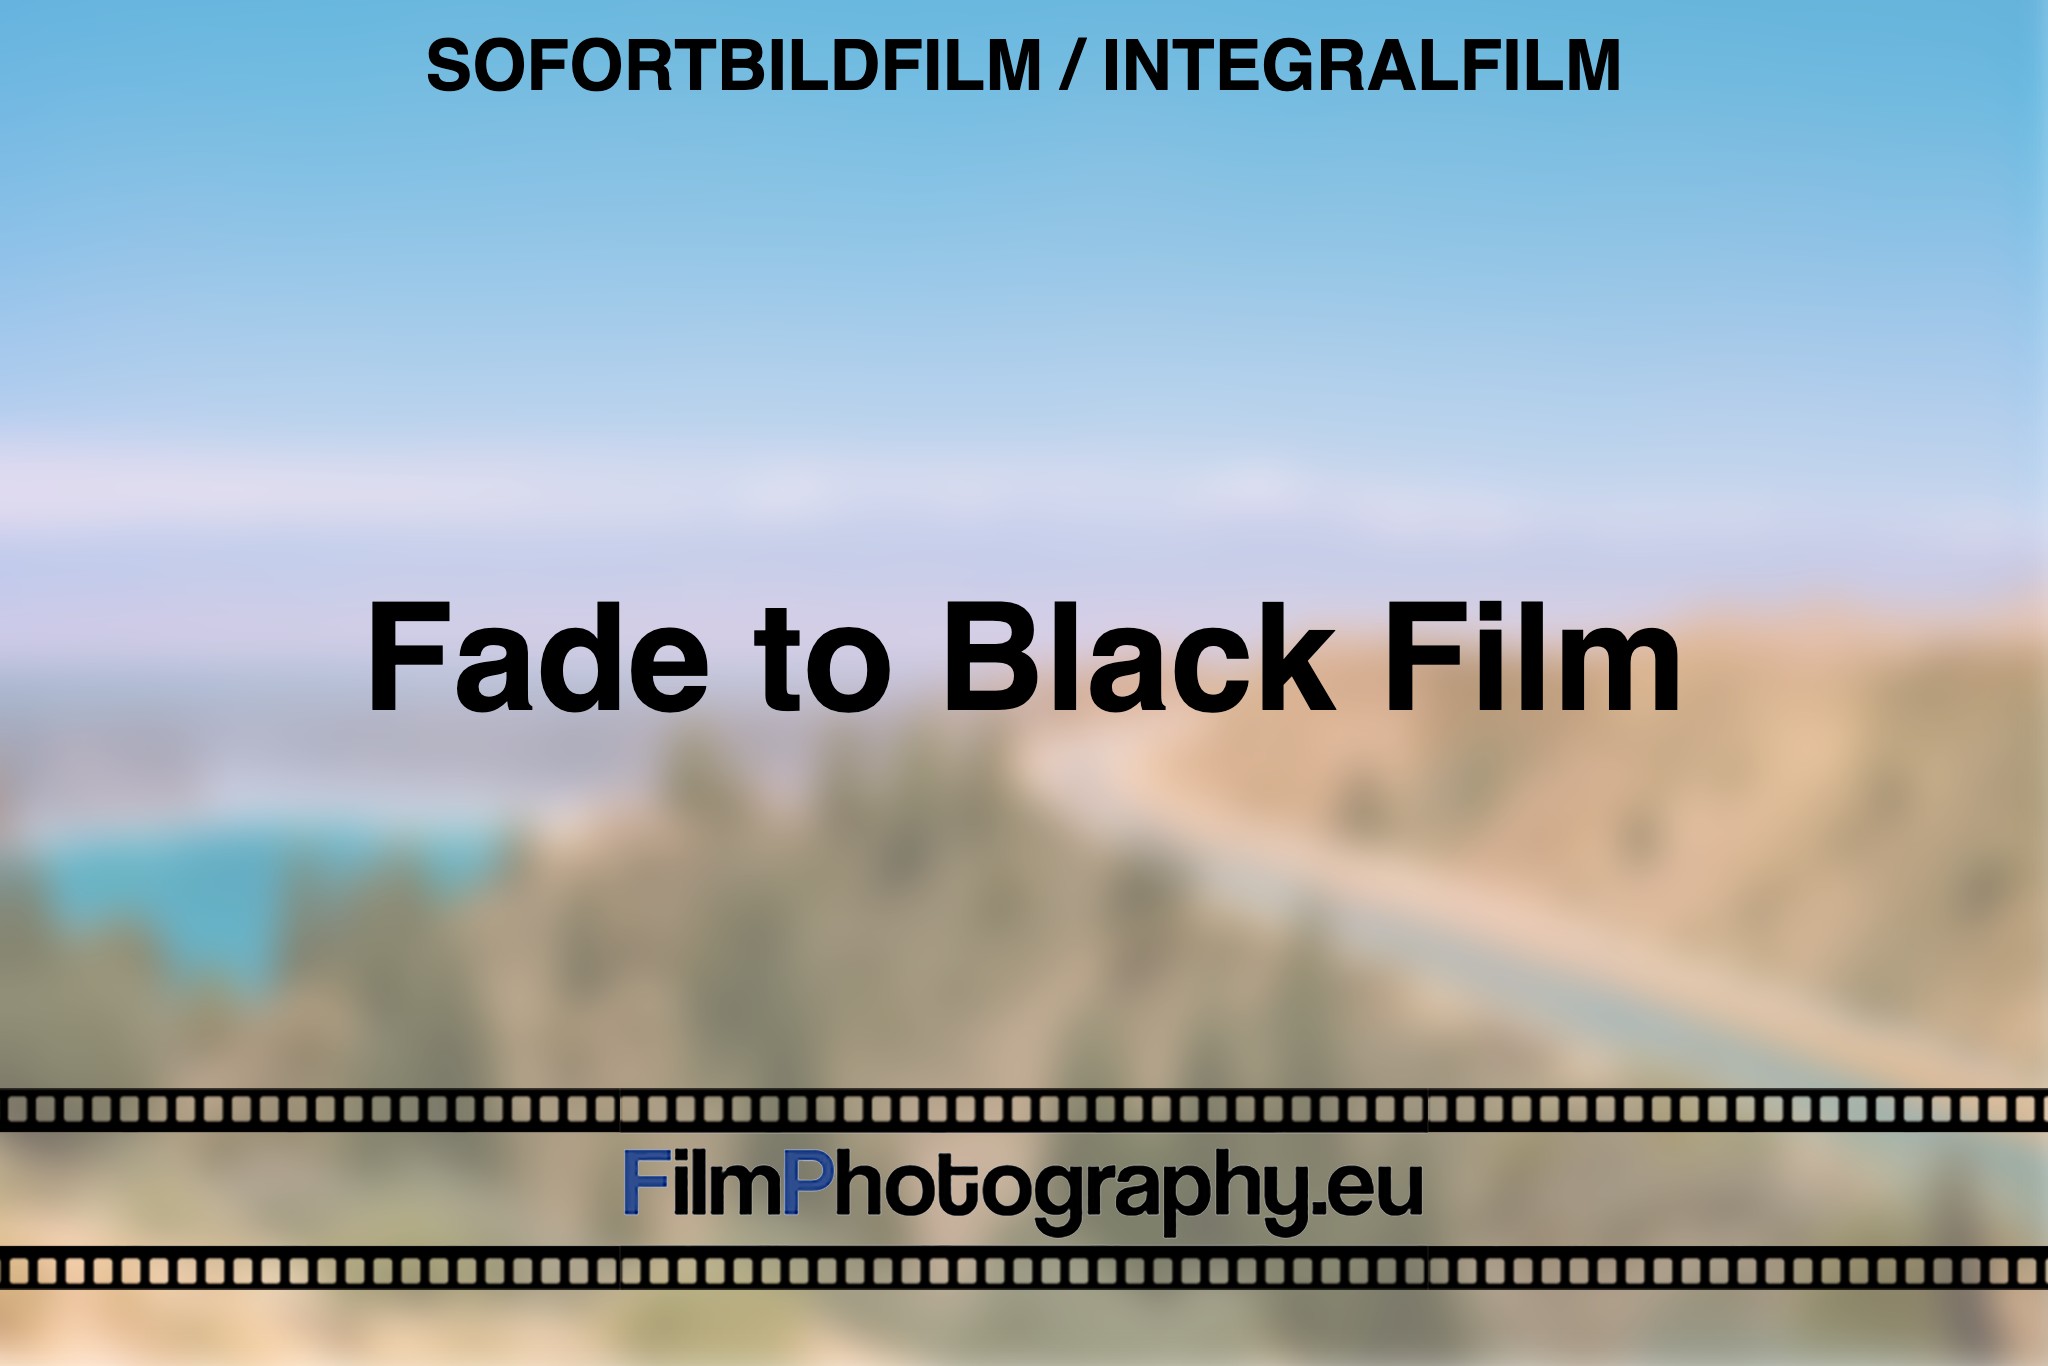 fade-to-black-film-sofortbildfilm-integralfilm-bnv